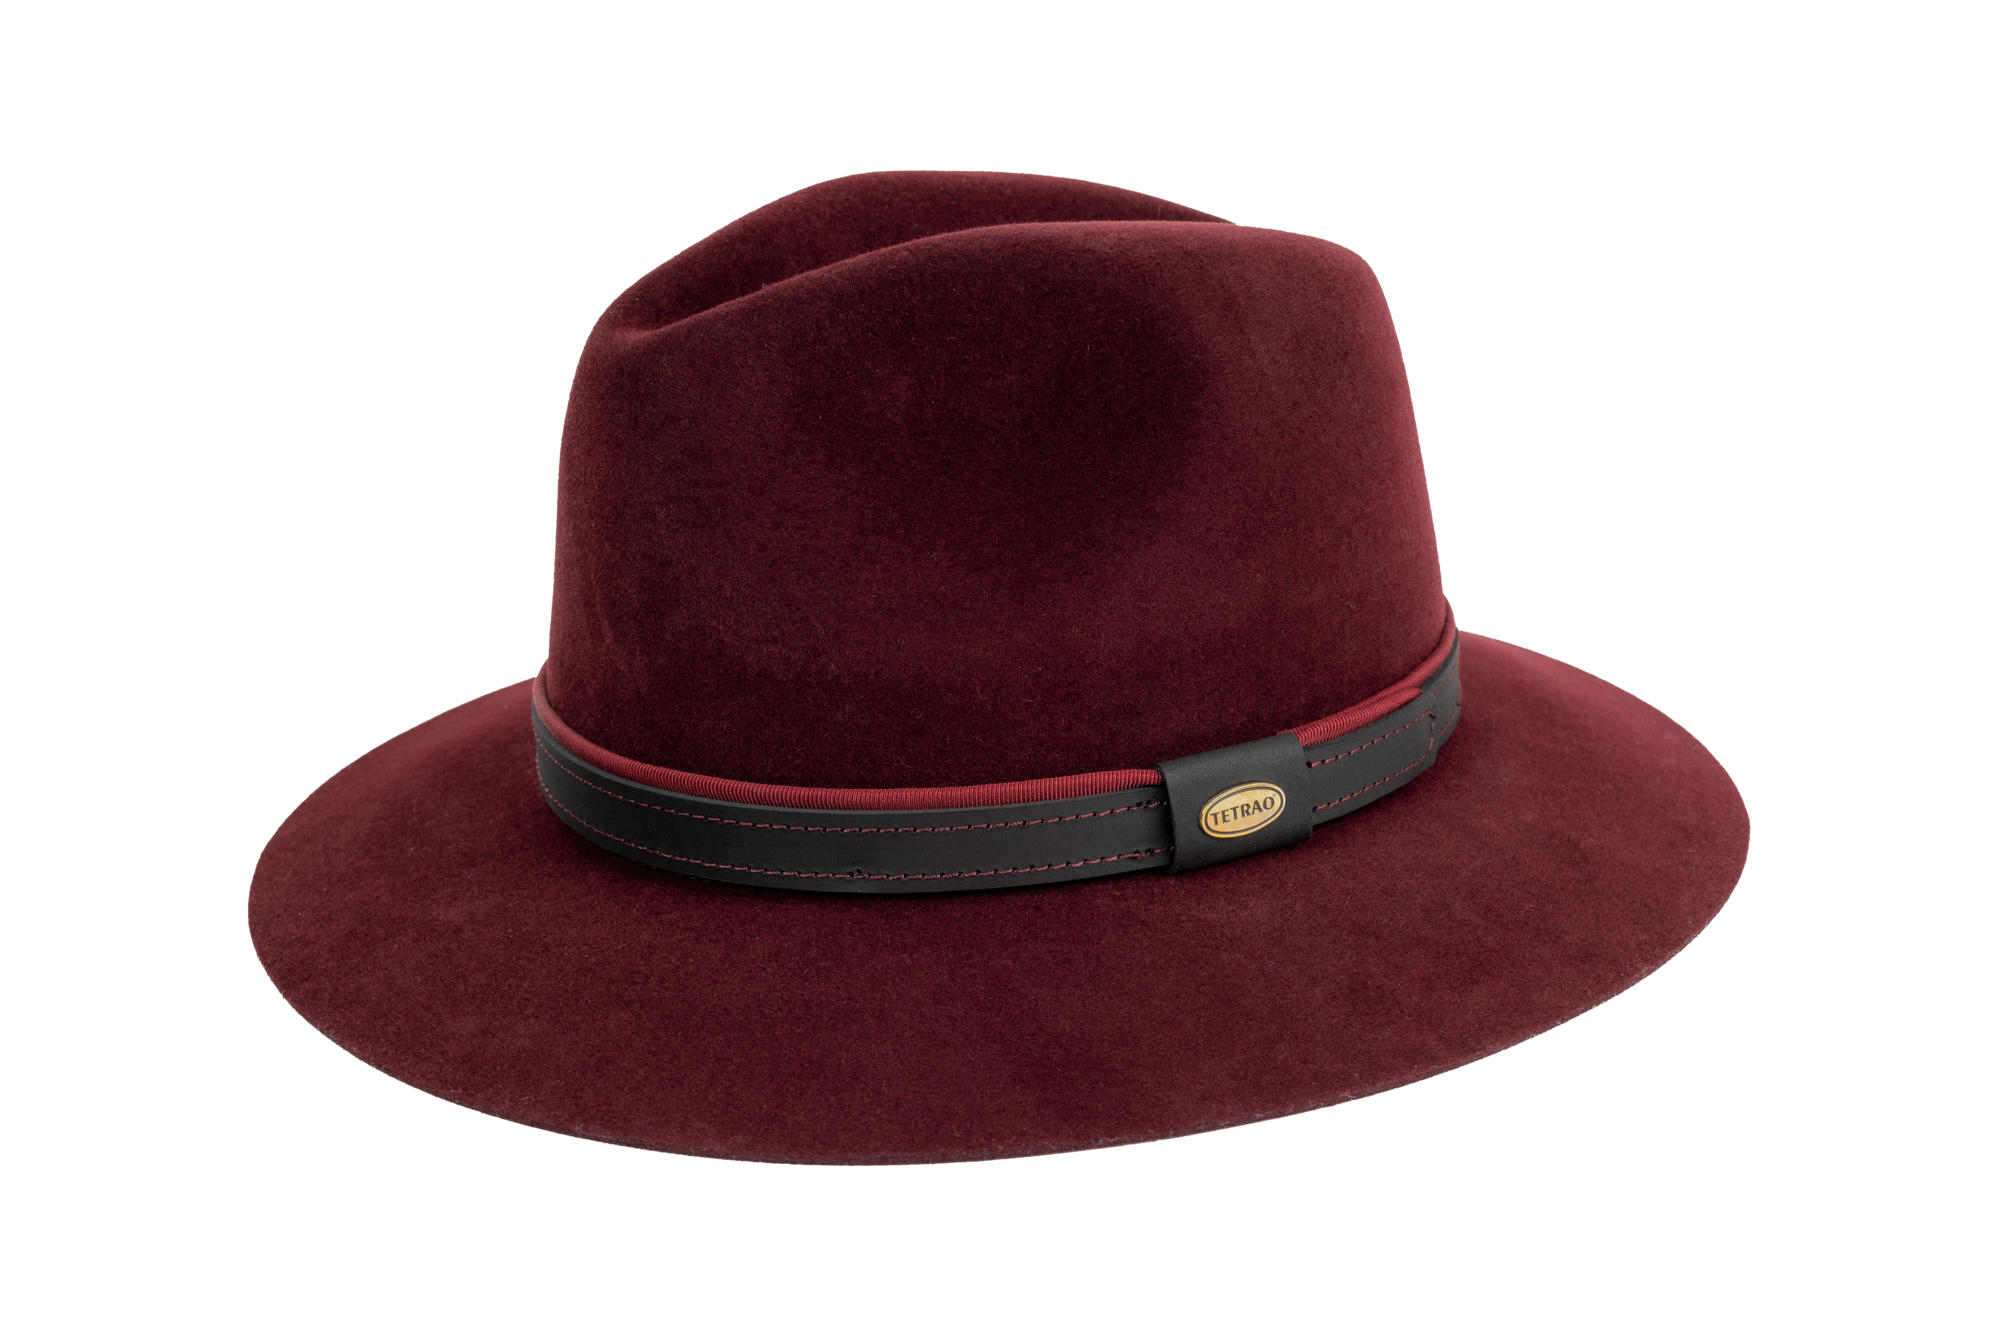 Poľovnícky klobúk TETRAO Exclusive zajac - bordó  57